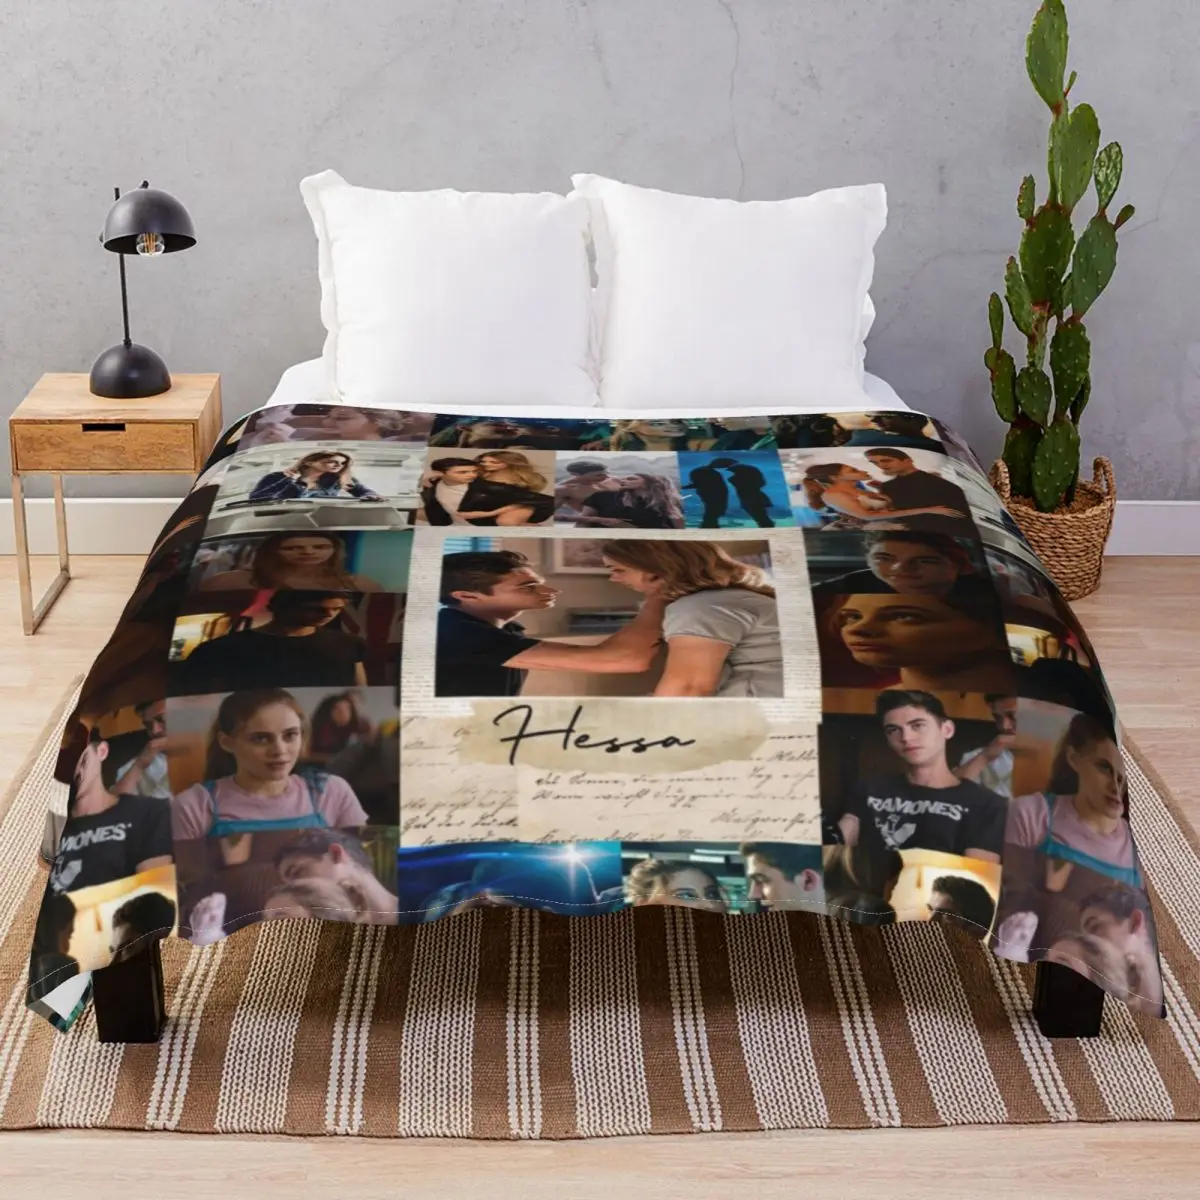 Hessa Collage Blankets Fleece Plush Decoration Super Warm Throw Blanket for Bedding Home Couch Camp Cinema